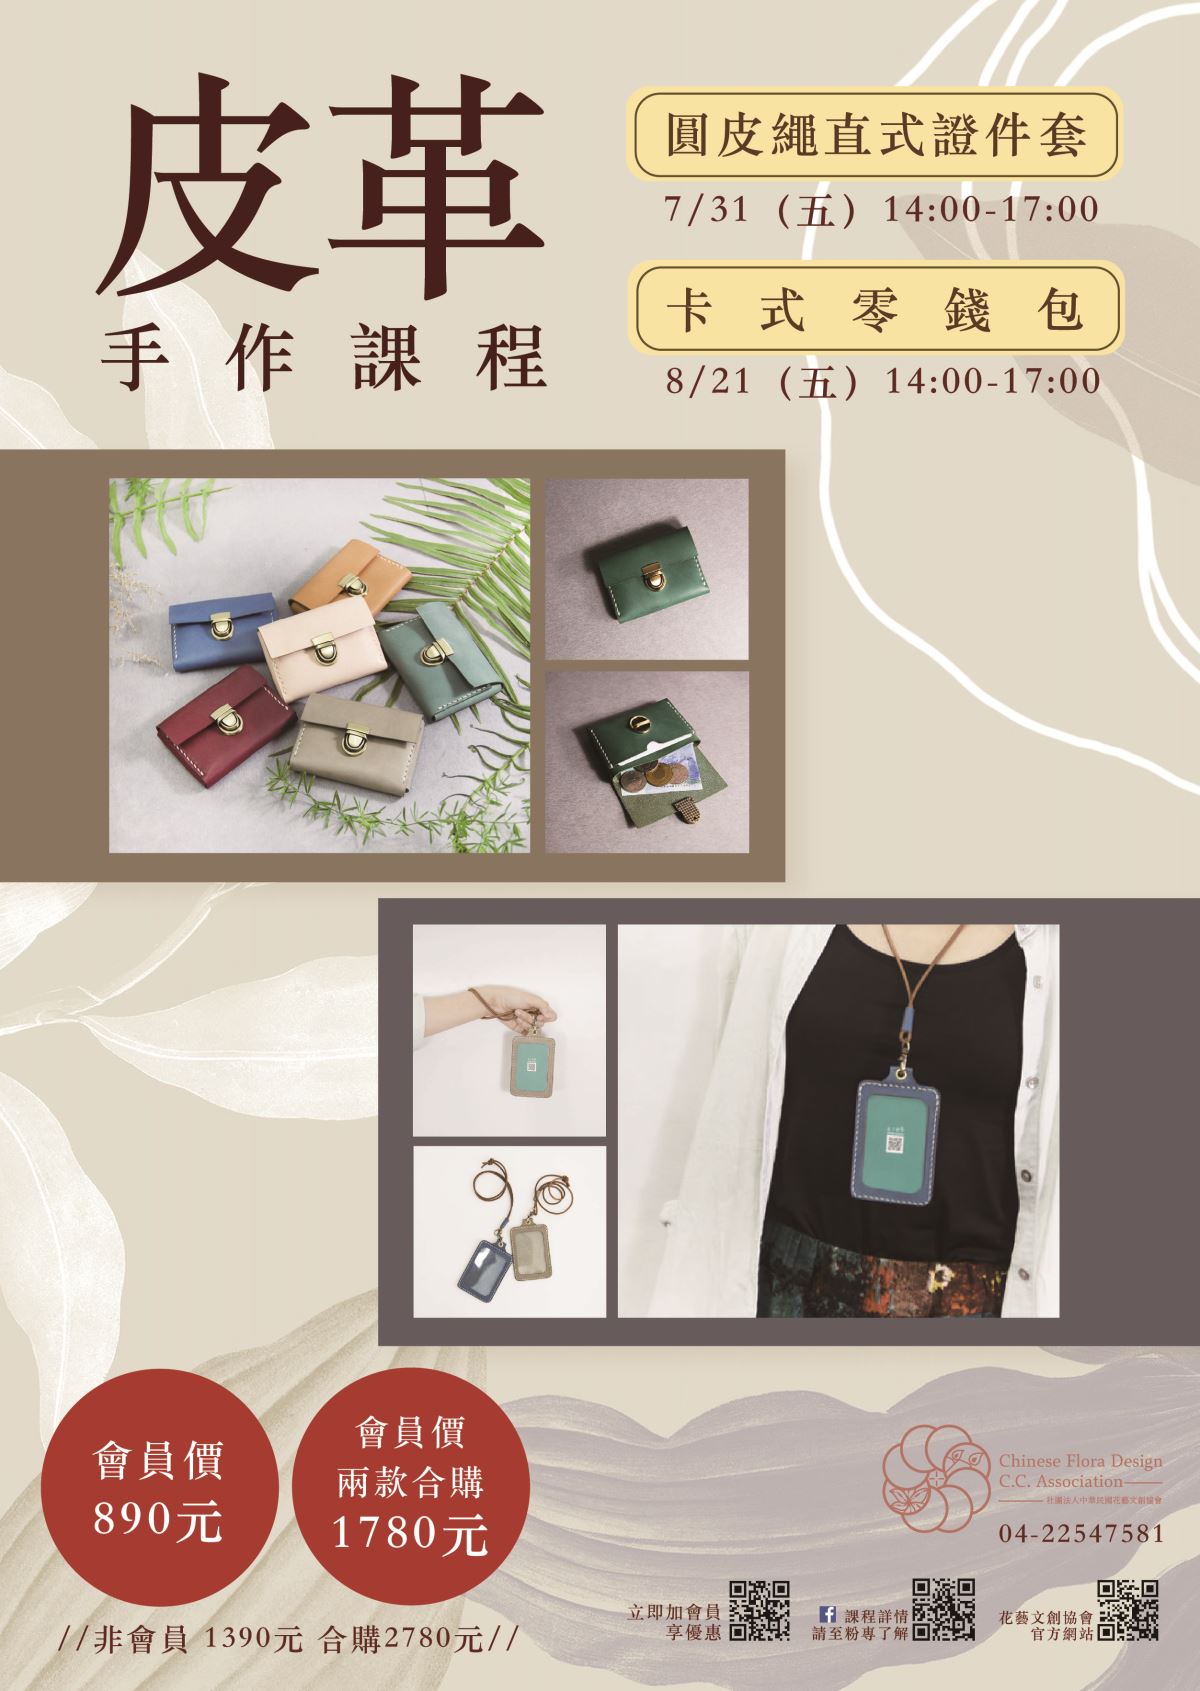 CFCCA社團法人中華民國花藝文創協會皮革手作課程